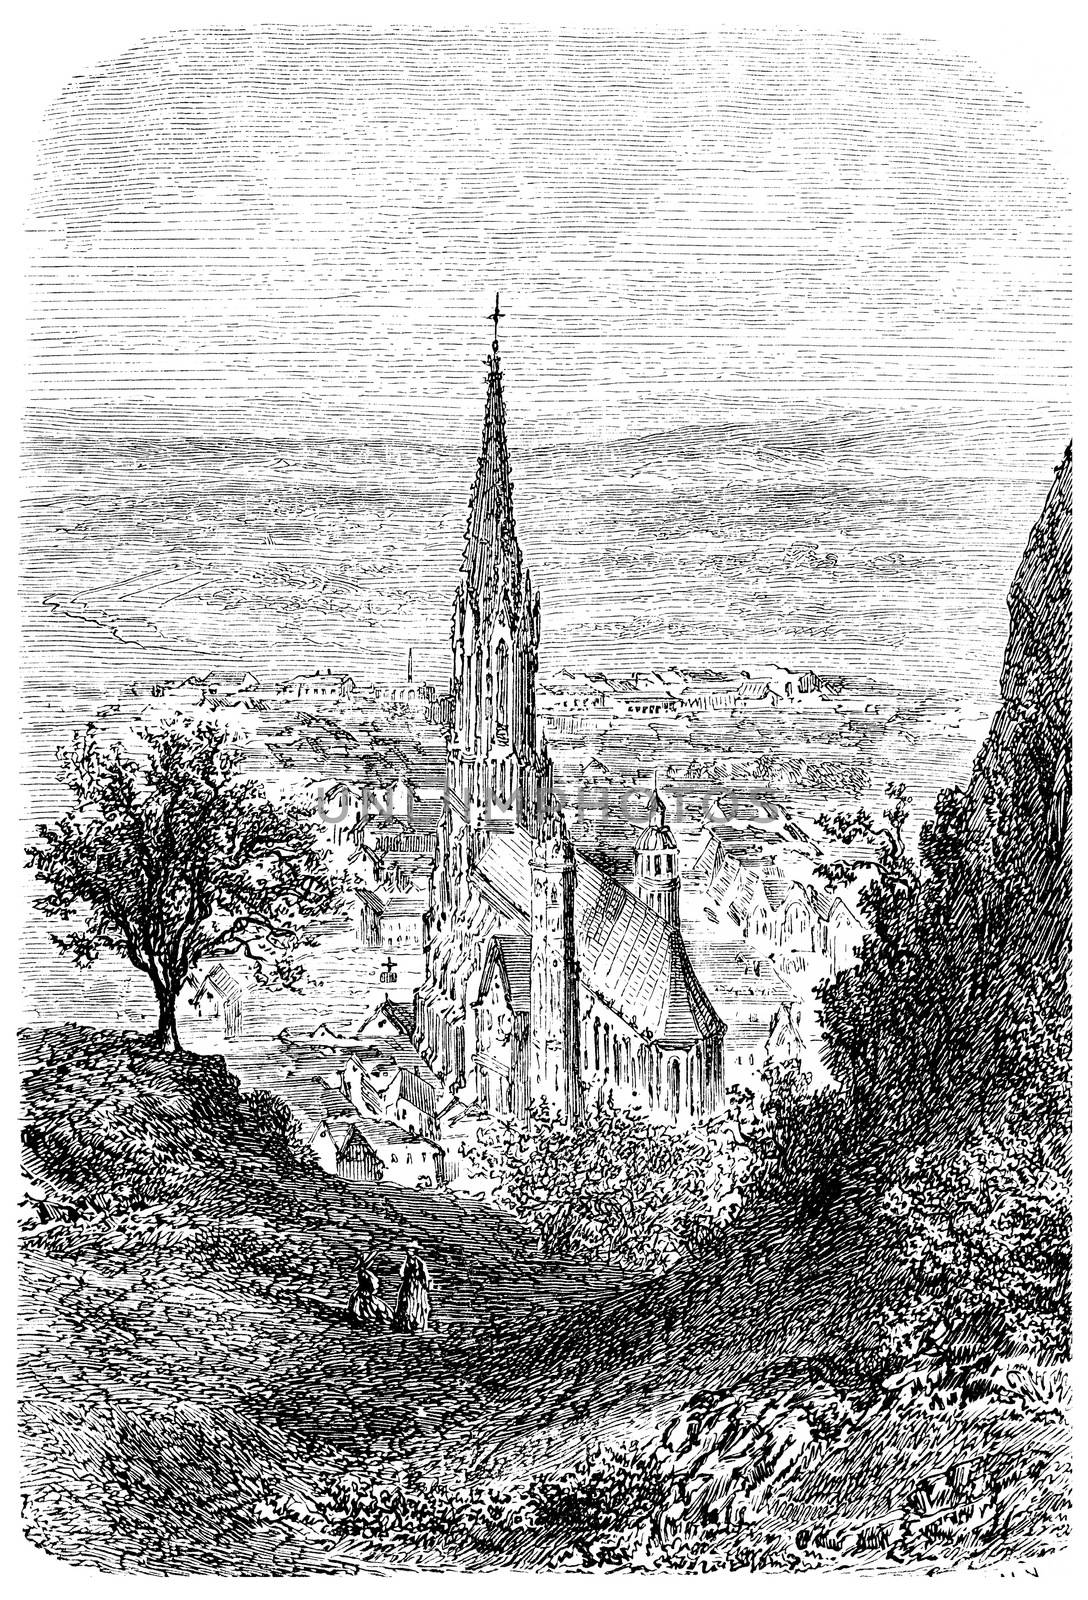 Freiburg in Breisgau, vintage engraved illustration. From Chemin des Ecoliers, 1861.
